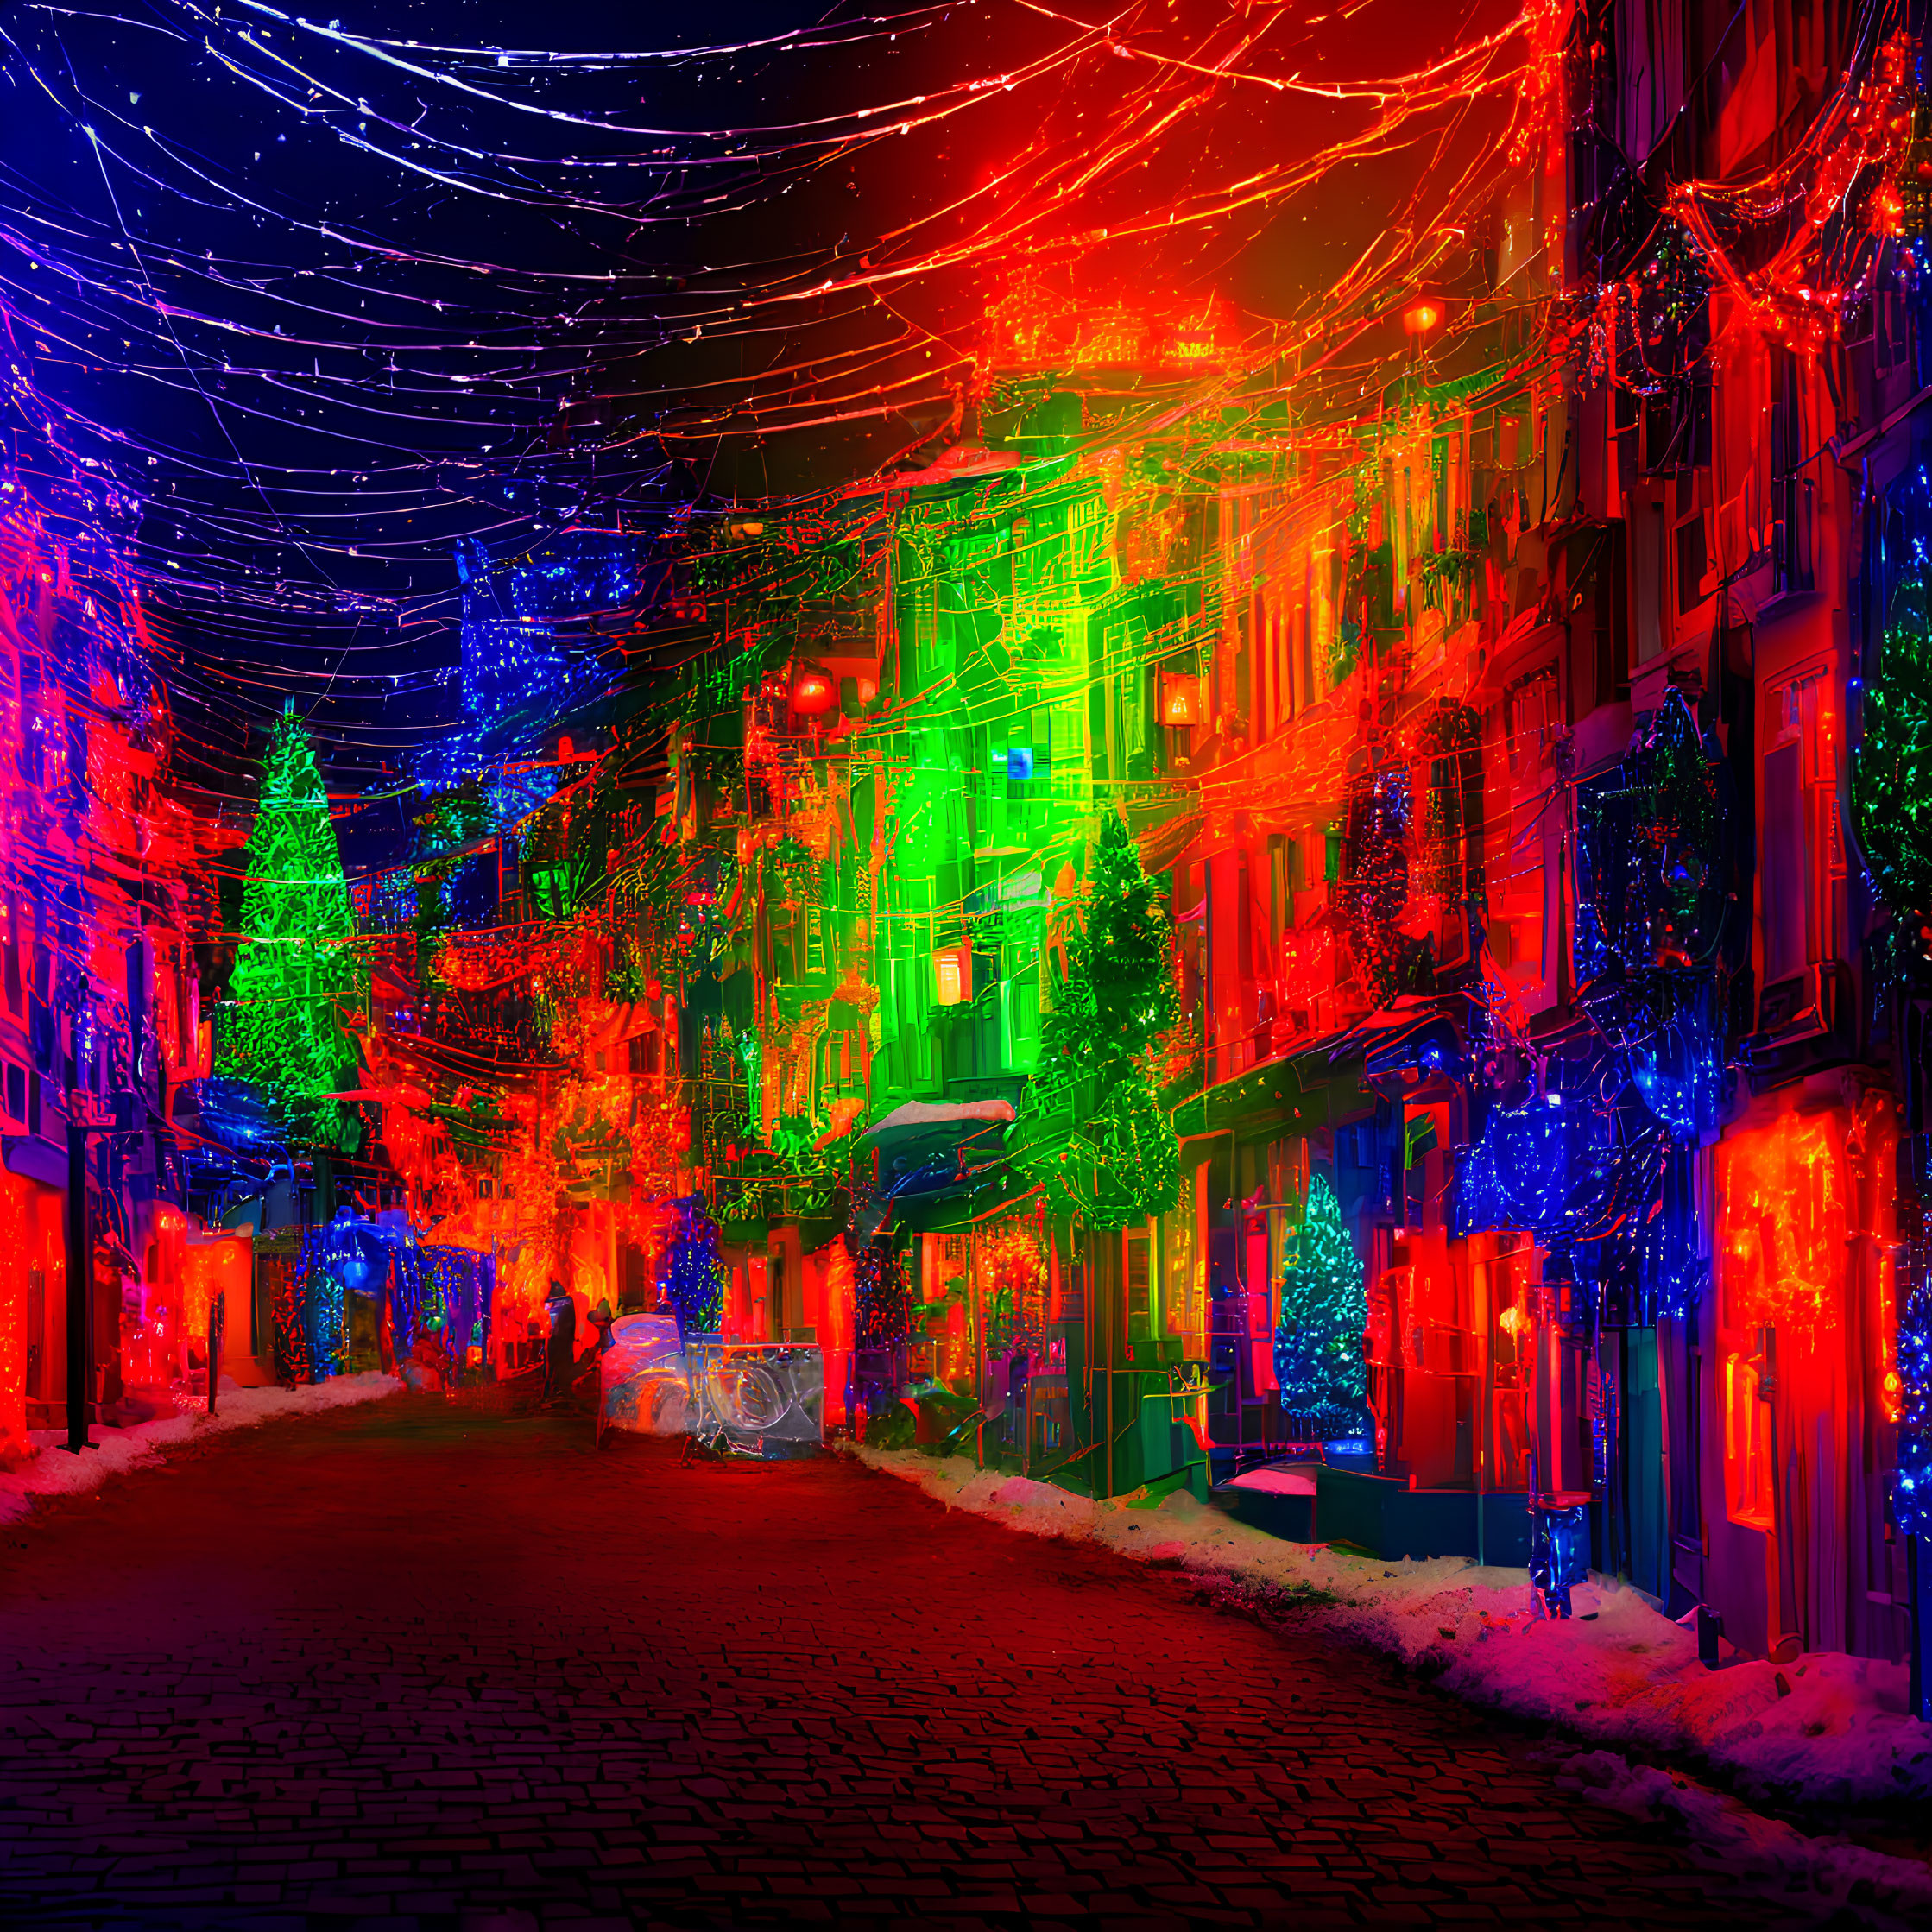 Colorful Christmas lights illuminate festive street scene at night